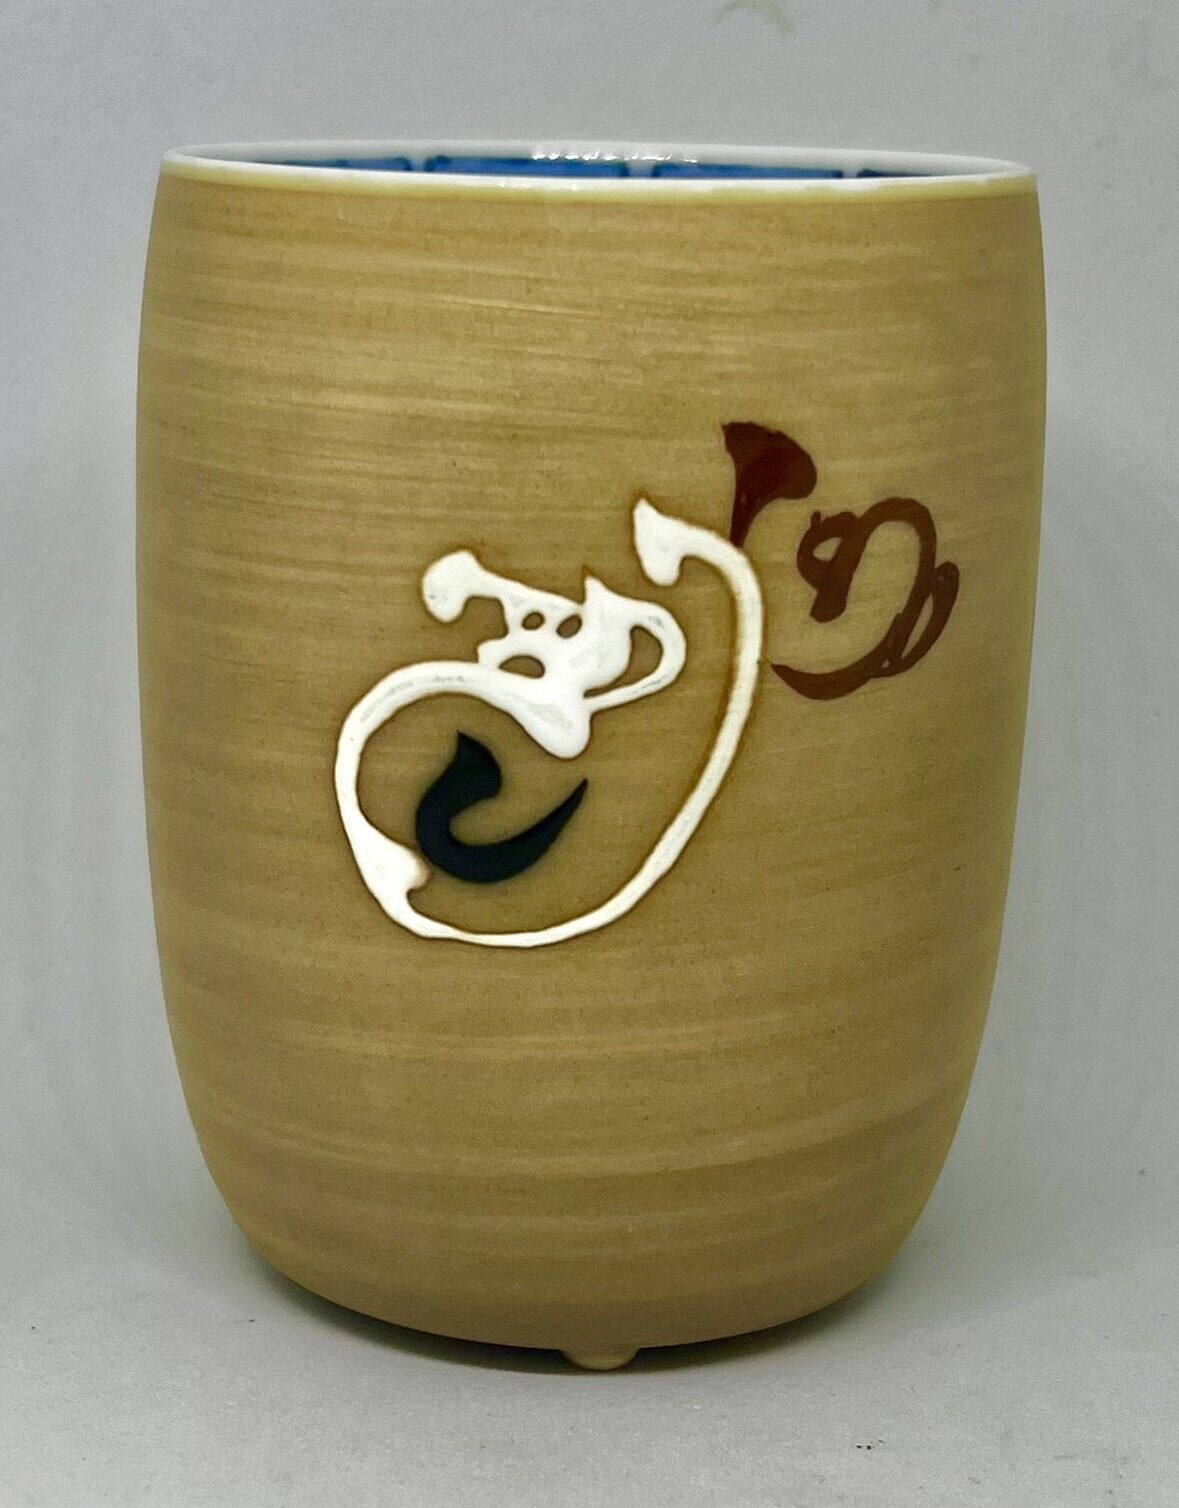 Vintage Porcelain Teacup Japanese Signed Check Our Store For More Vintage & Antq